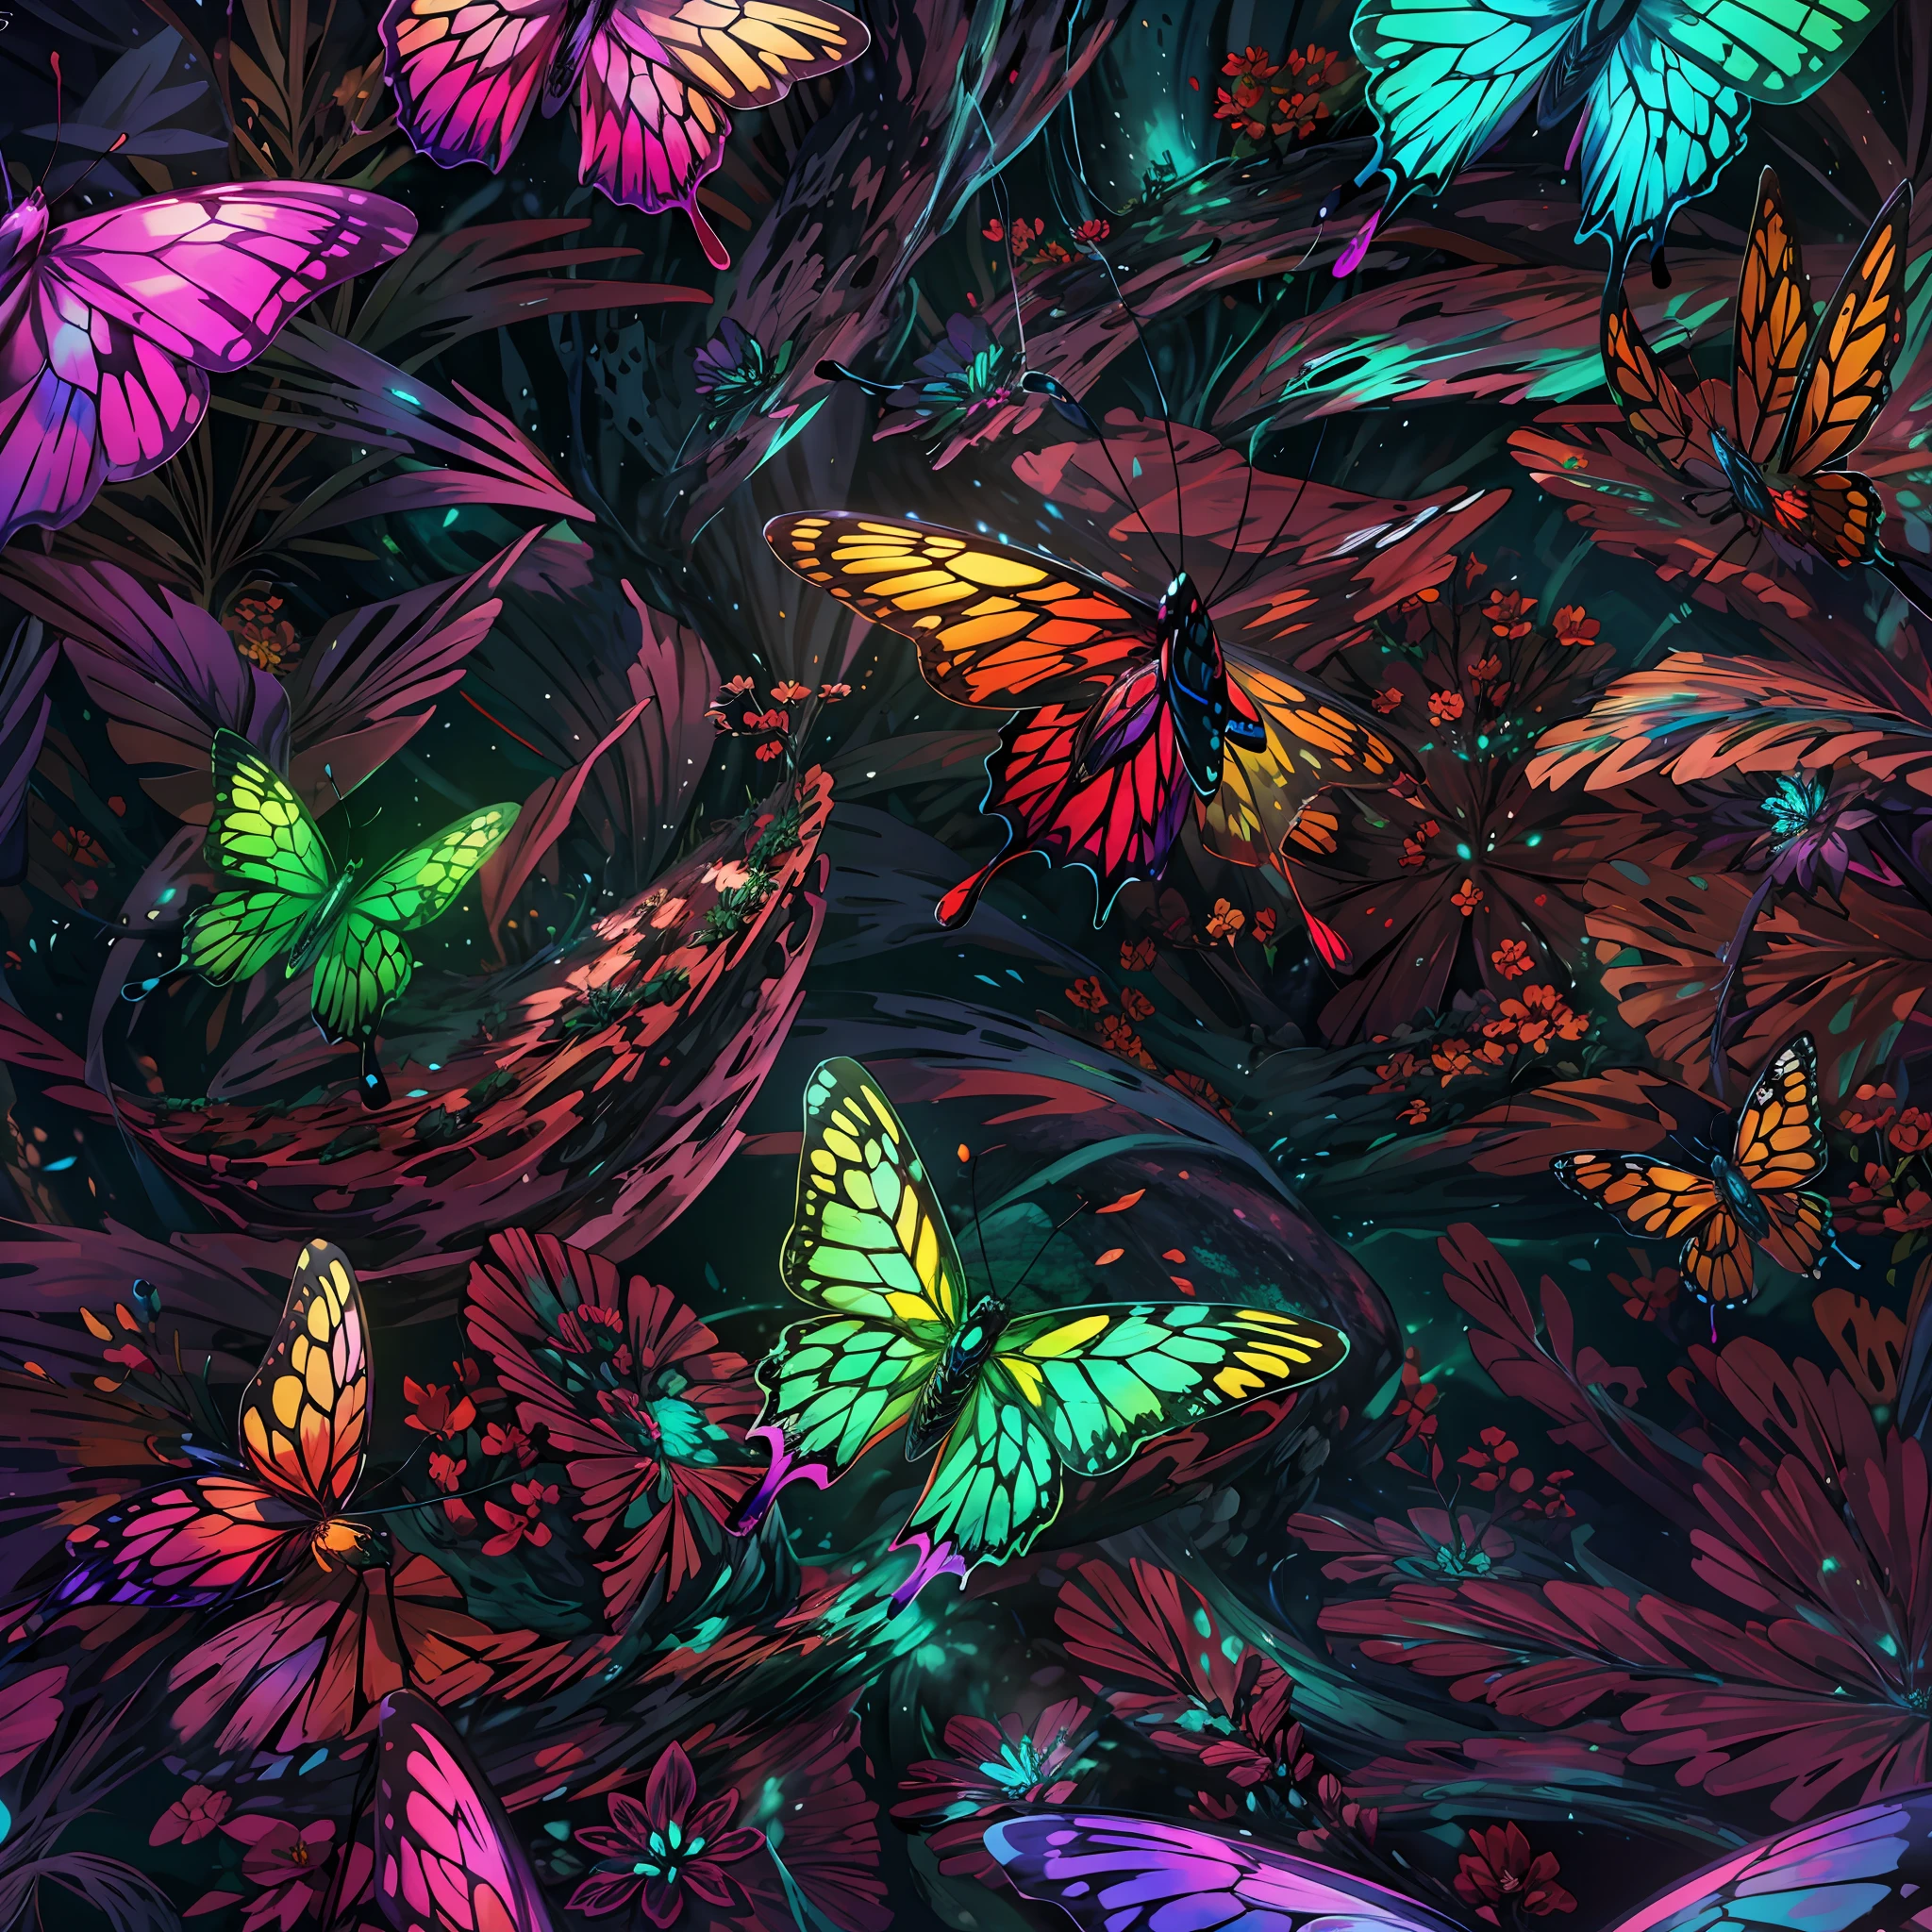 close shot  of a 色ful butterfly, 大きな翼, 詳細, 詳細 wings, 蝶はエイリアンの森の中の大きな葉の上を飛んでいます , 光る翼, クリスタルのような ,集中, エイリアンの風景の背景 .壊す,詳細,現実的,4k highly 詳細 digital art,オクタンレンダリング, 生物発光する, 壊す 8K resolution concept art, リアリズム,マッパスタジオ,傑作,最高品質,公式アート,図,明確なライン,(いいね_色),完璧な構成,不条理な, ファンタジー,集中ed,三分割法,